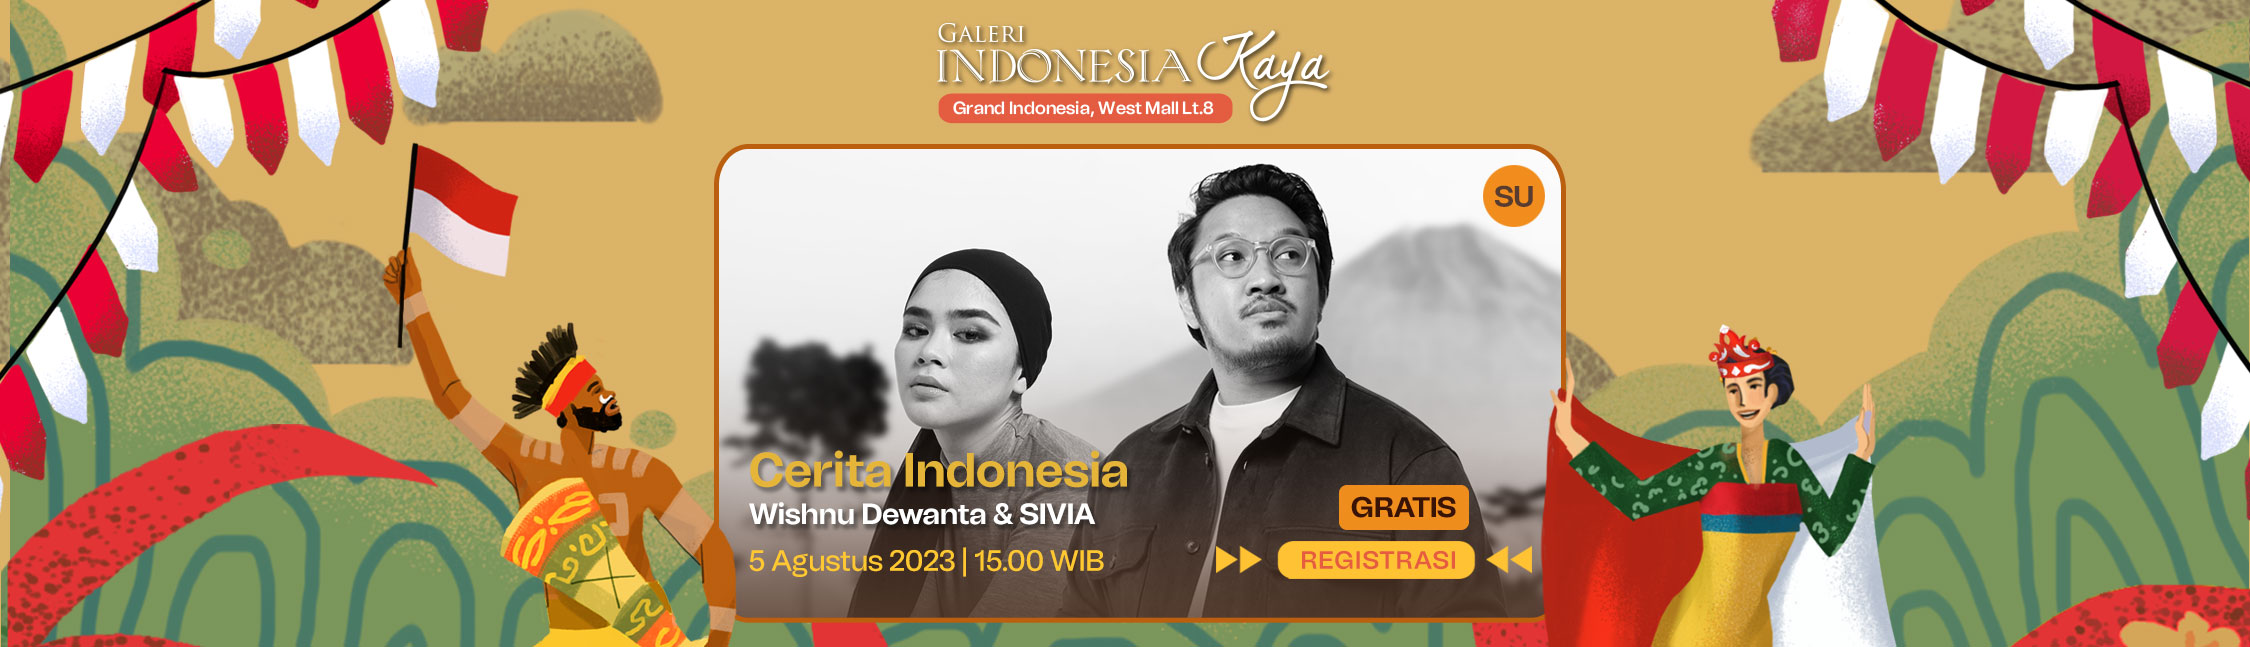 Cerita Indonesia Wishnu Dewanta & SIVIA